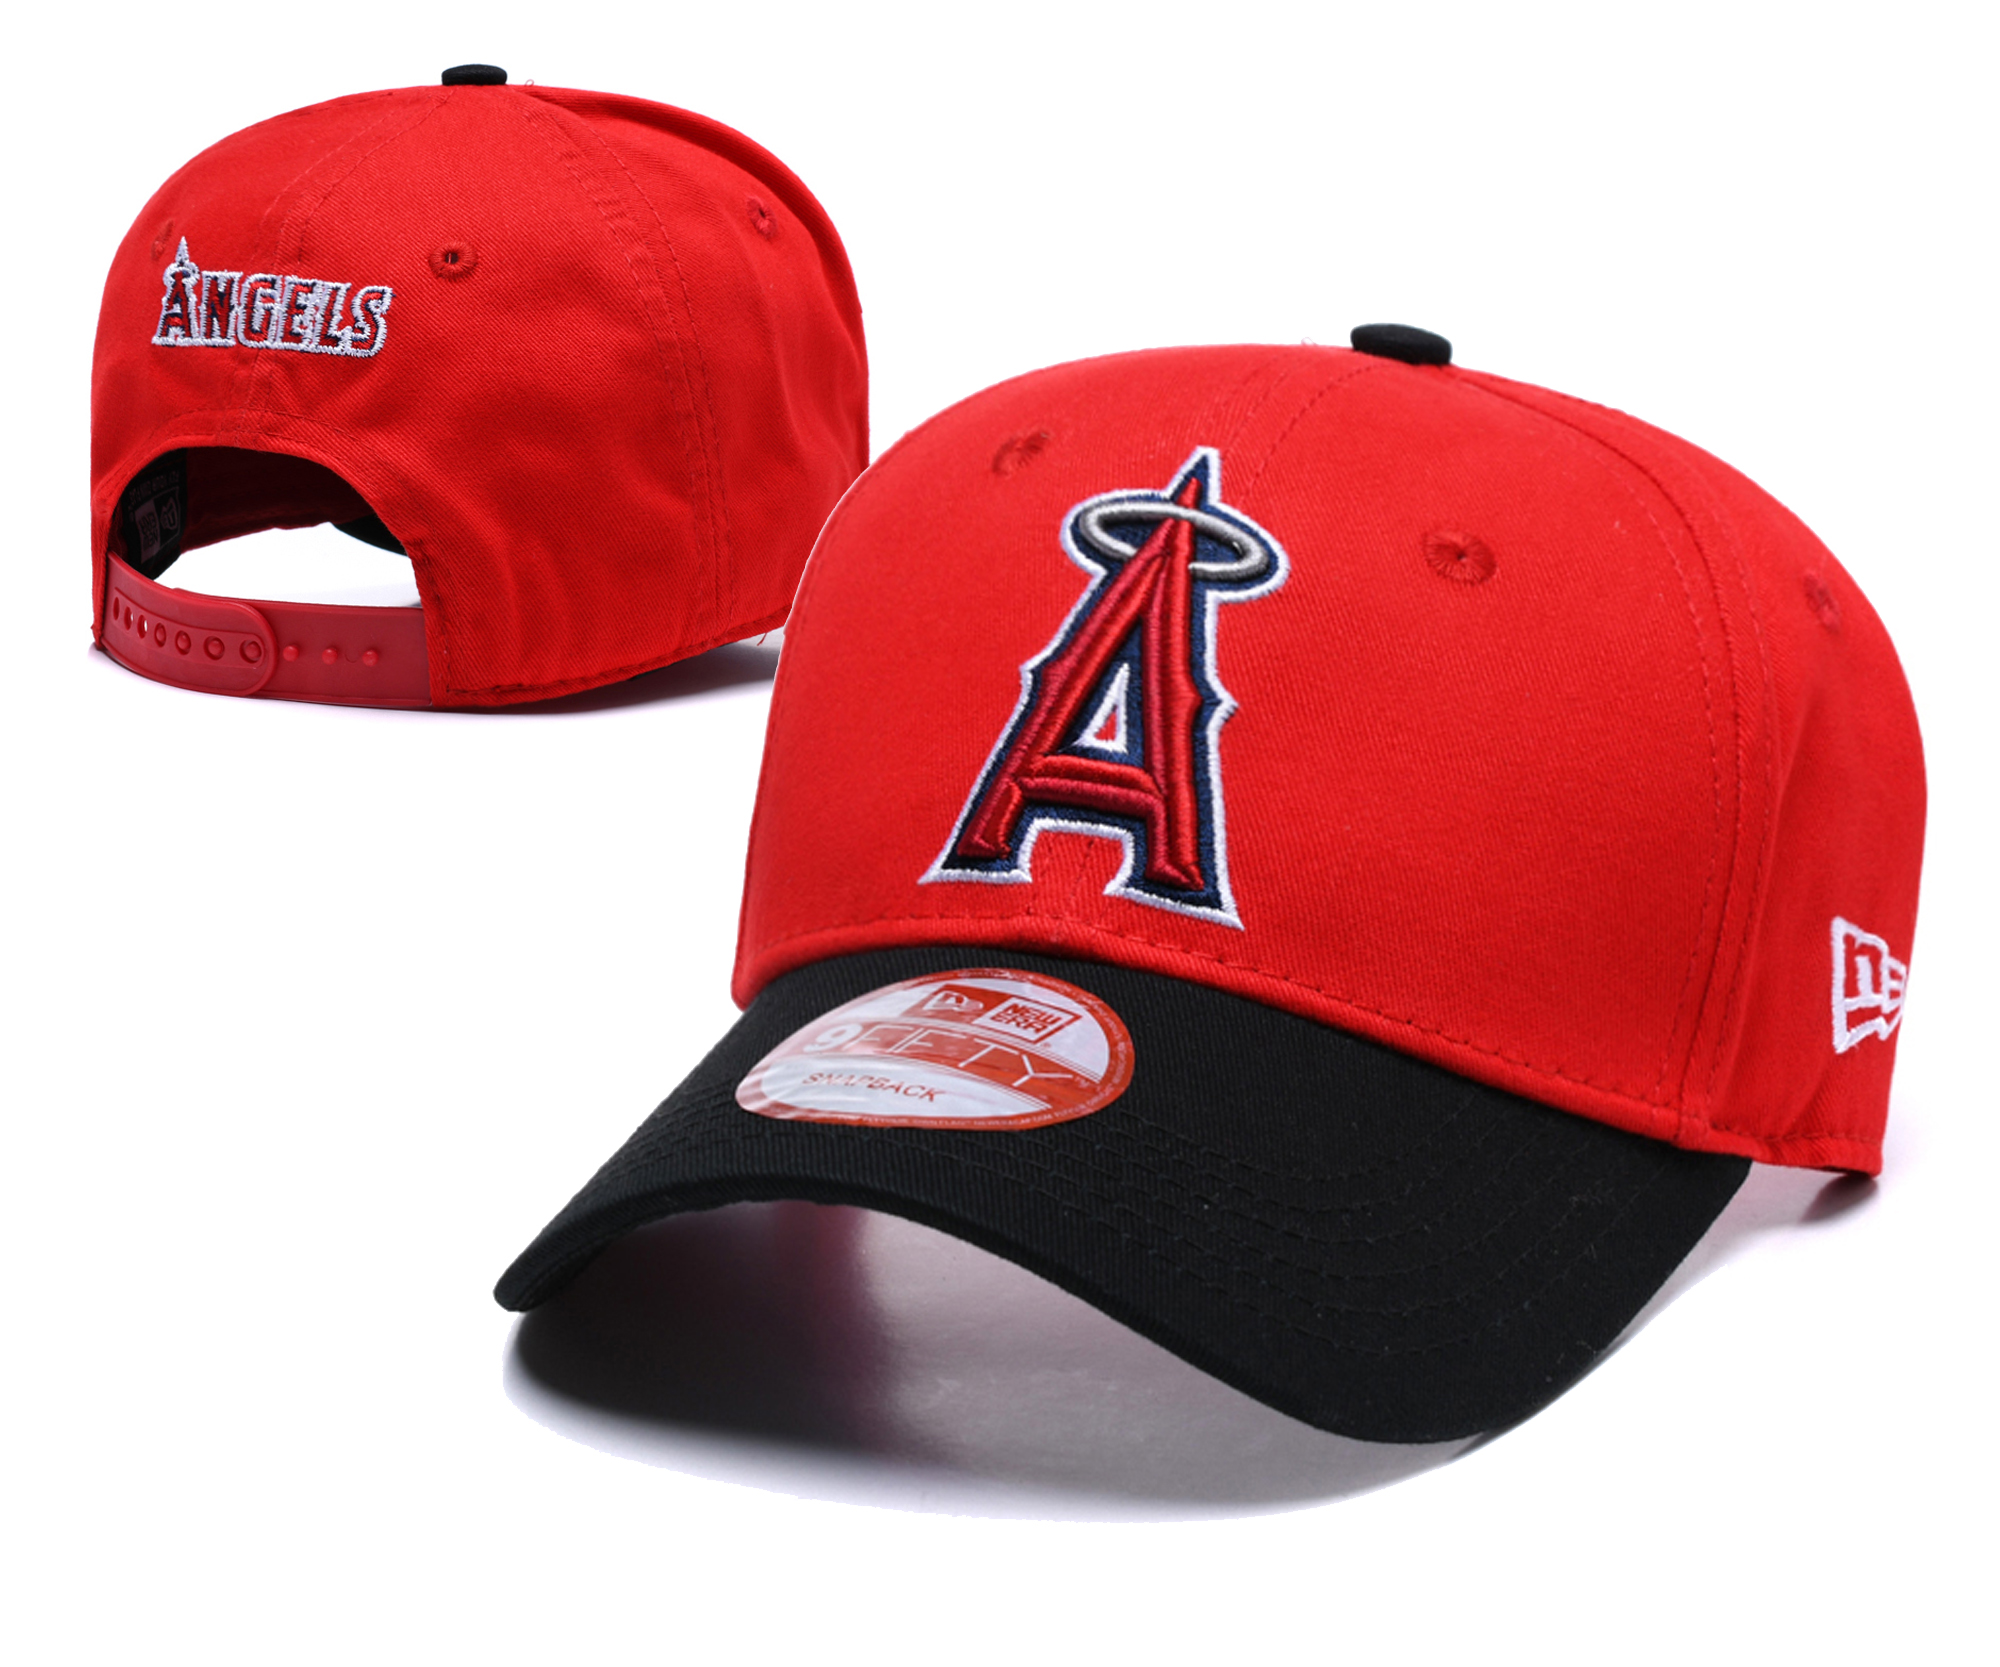 Angels Fresh Logo Red Black Peaked Adjustable Hat TX